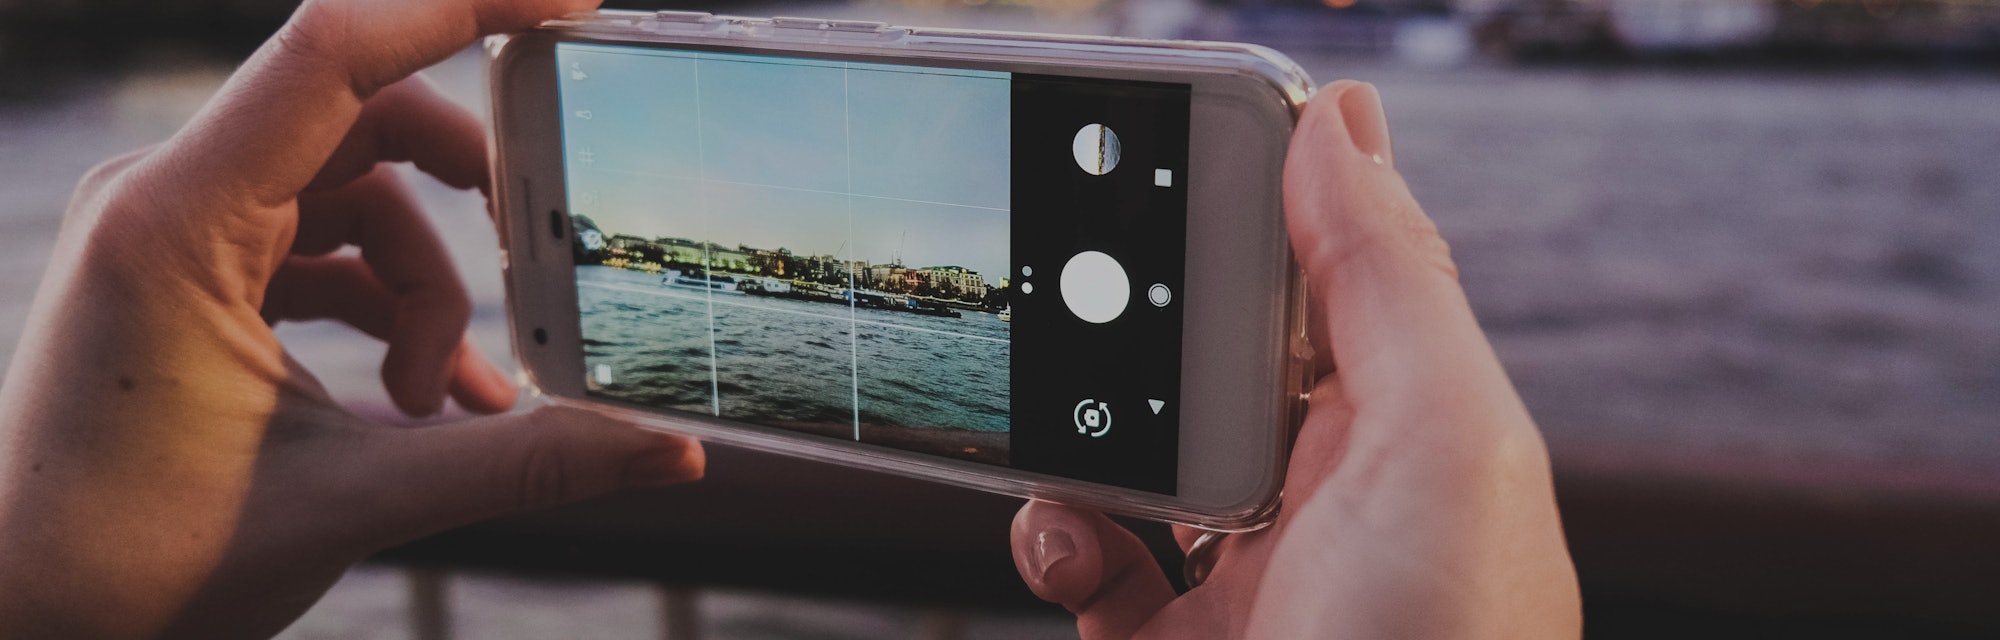 London, River Thames seen through smart-phone camera